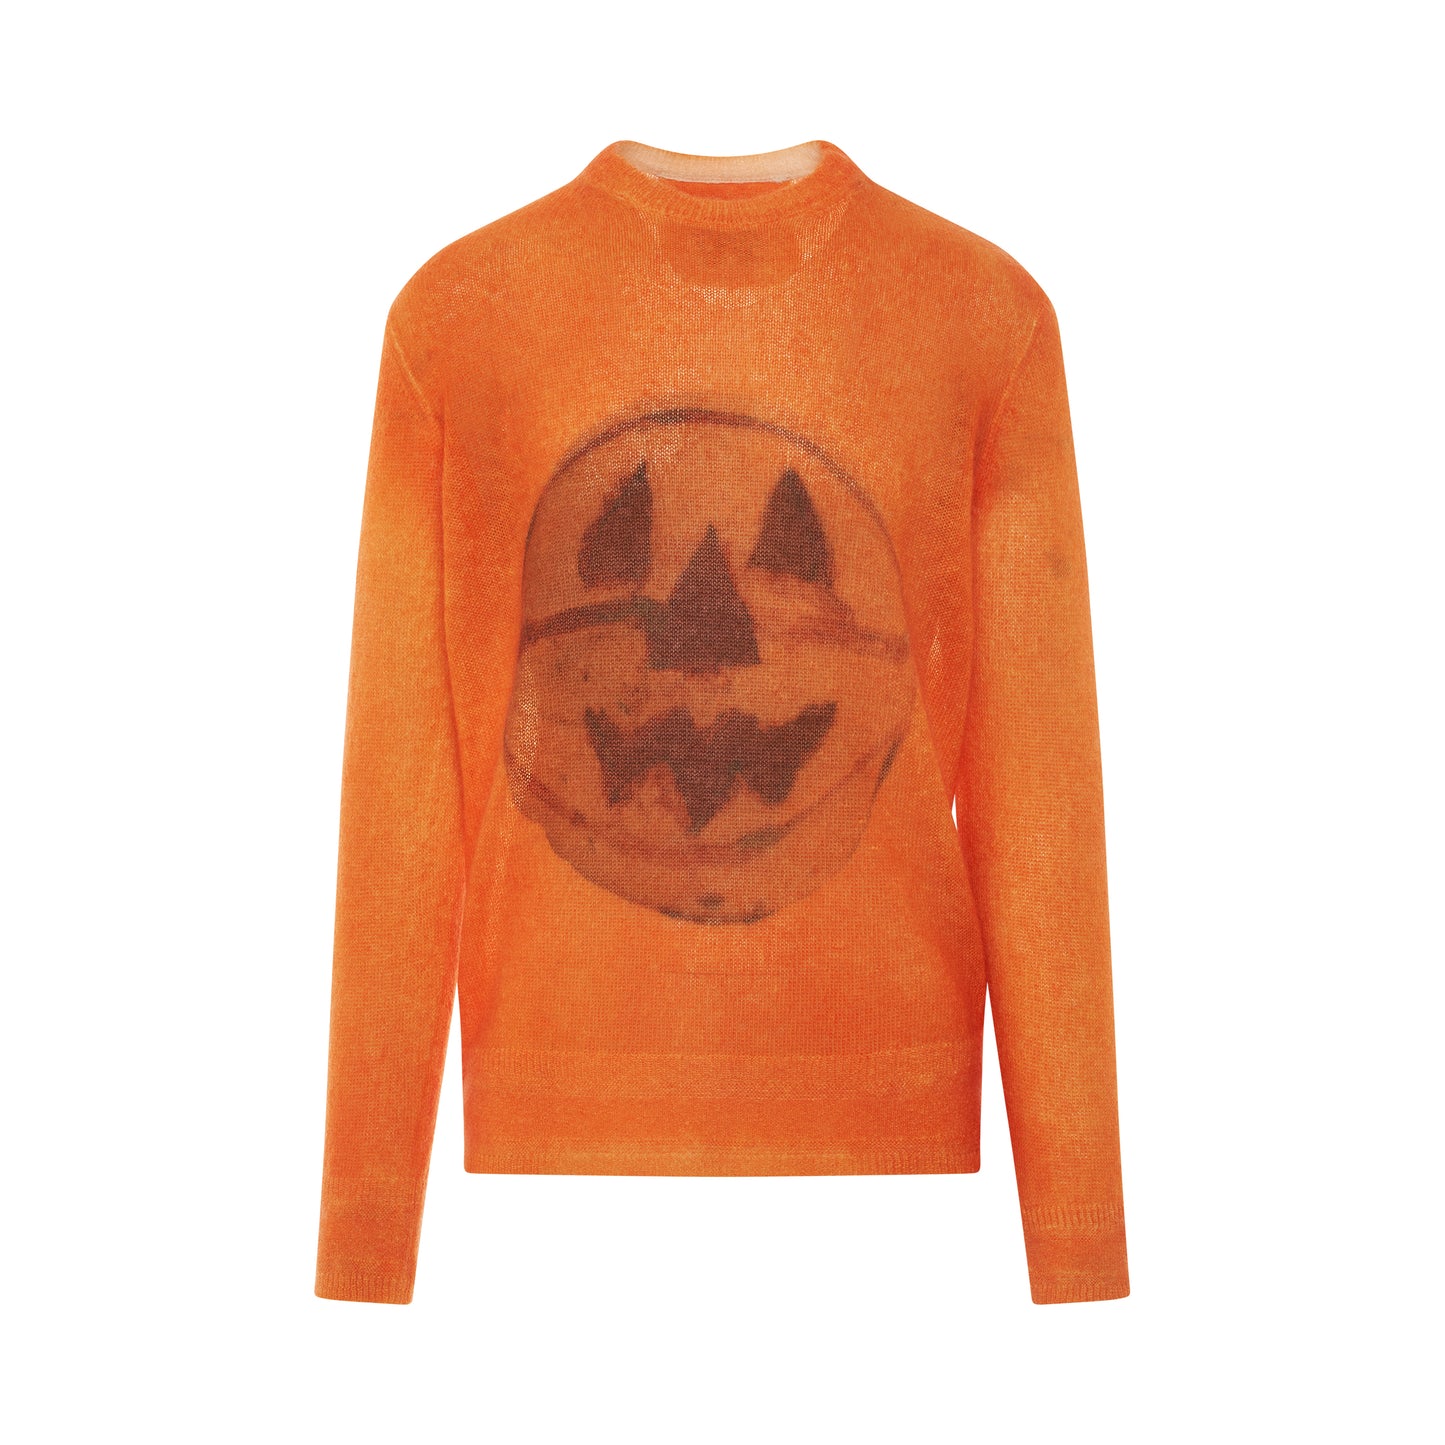 Mixmat Crewneck Print Sweater in Pumpkin